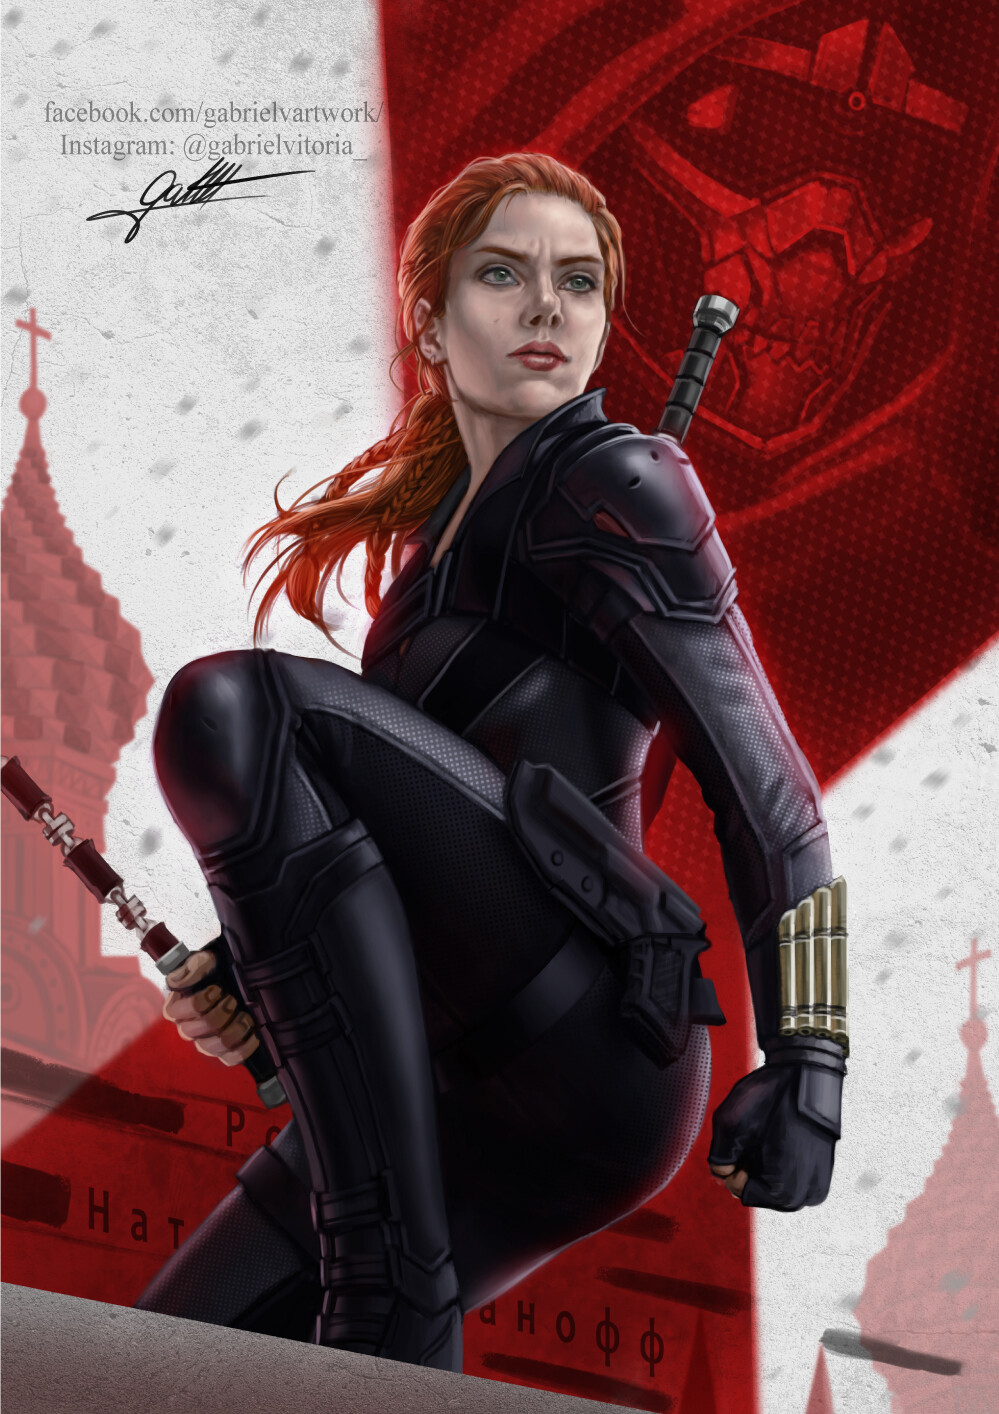 Fanart of the new Black Widow movie.